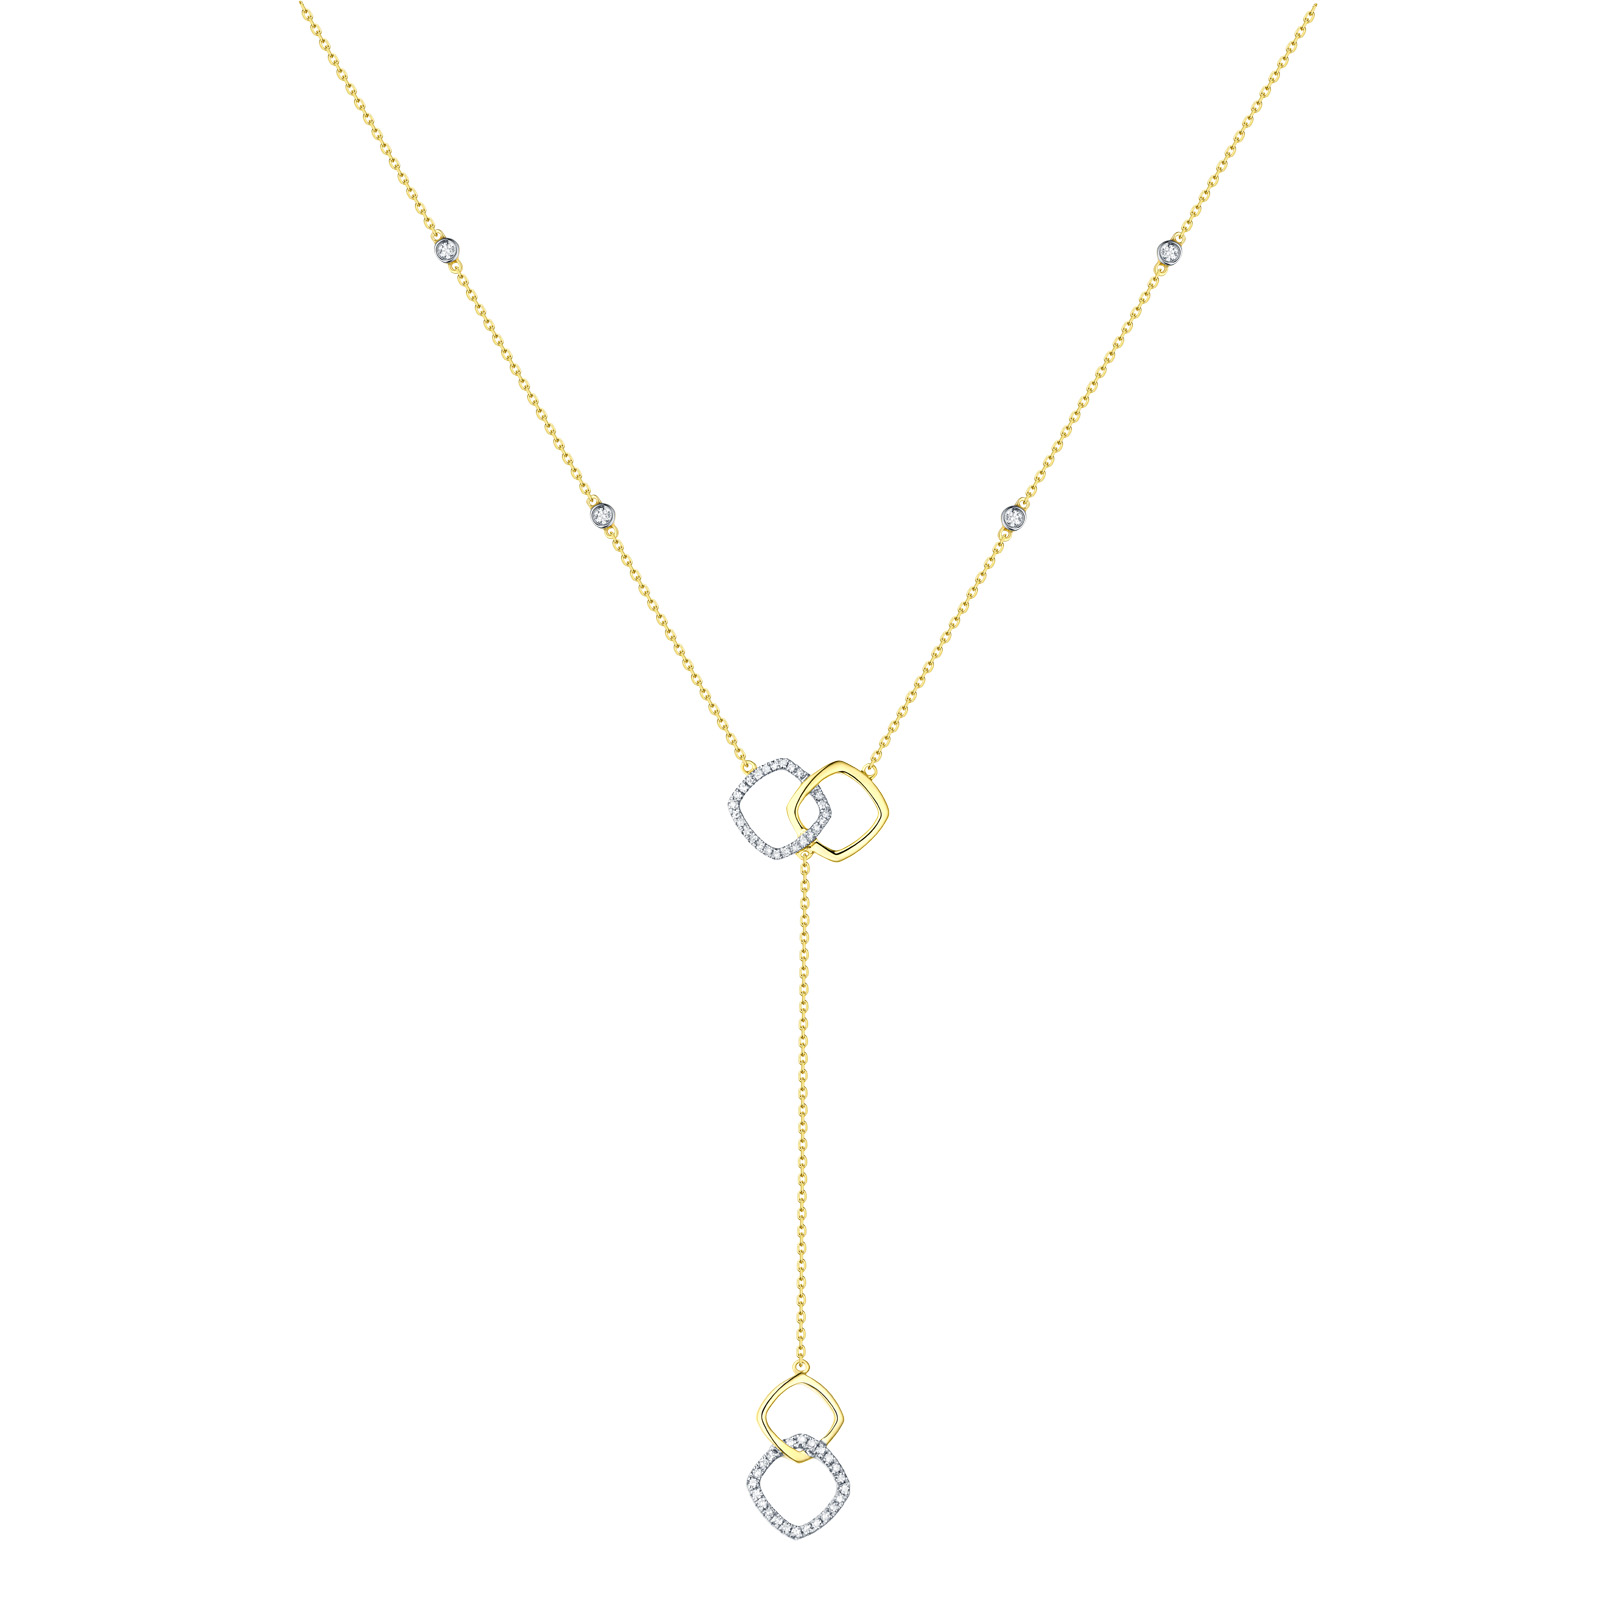 NL25998WHT- 14K Yellow Gold Diamond Necklace, 0.16 TCW